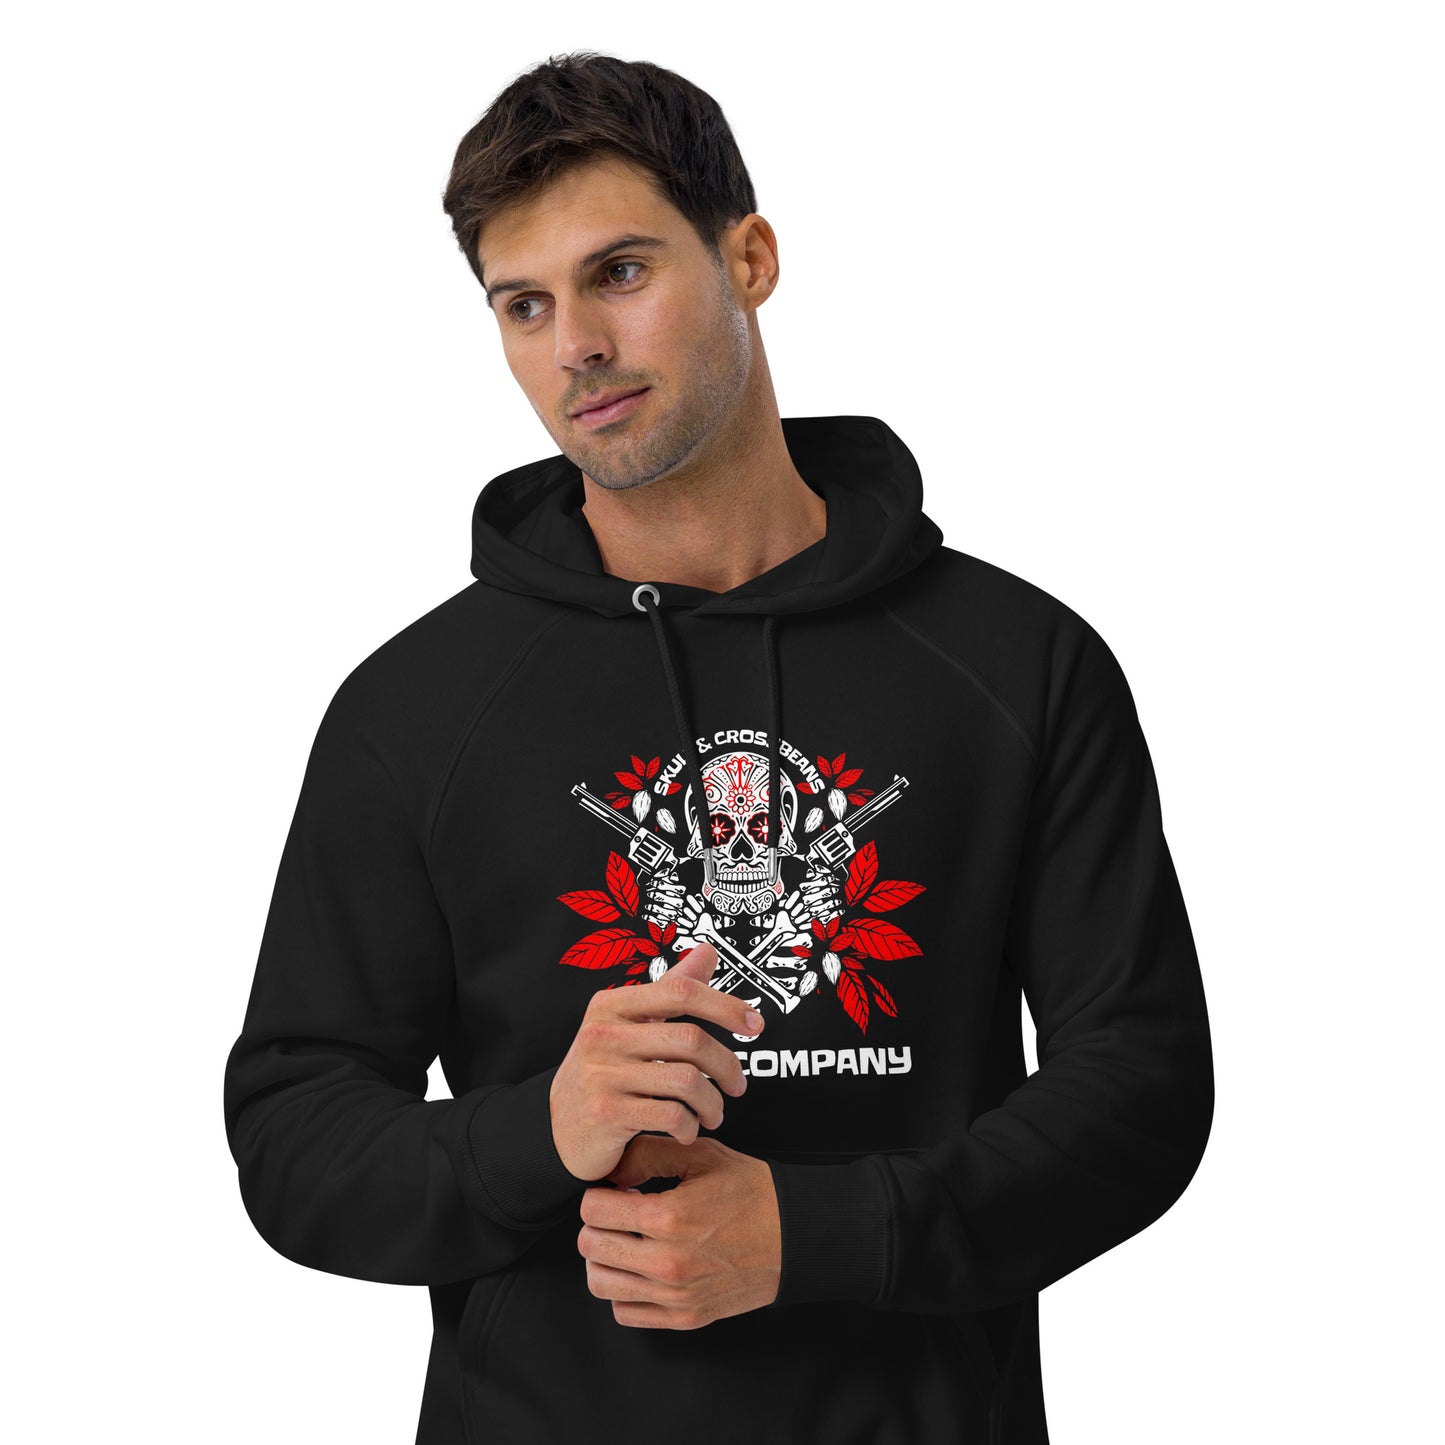 Skull and CrossBeans Coffee Company Unisex eco raglan hoodie